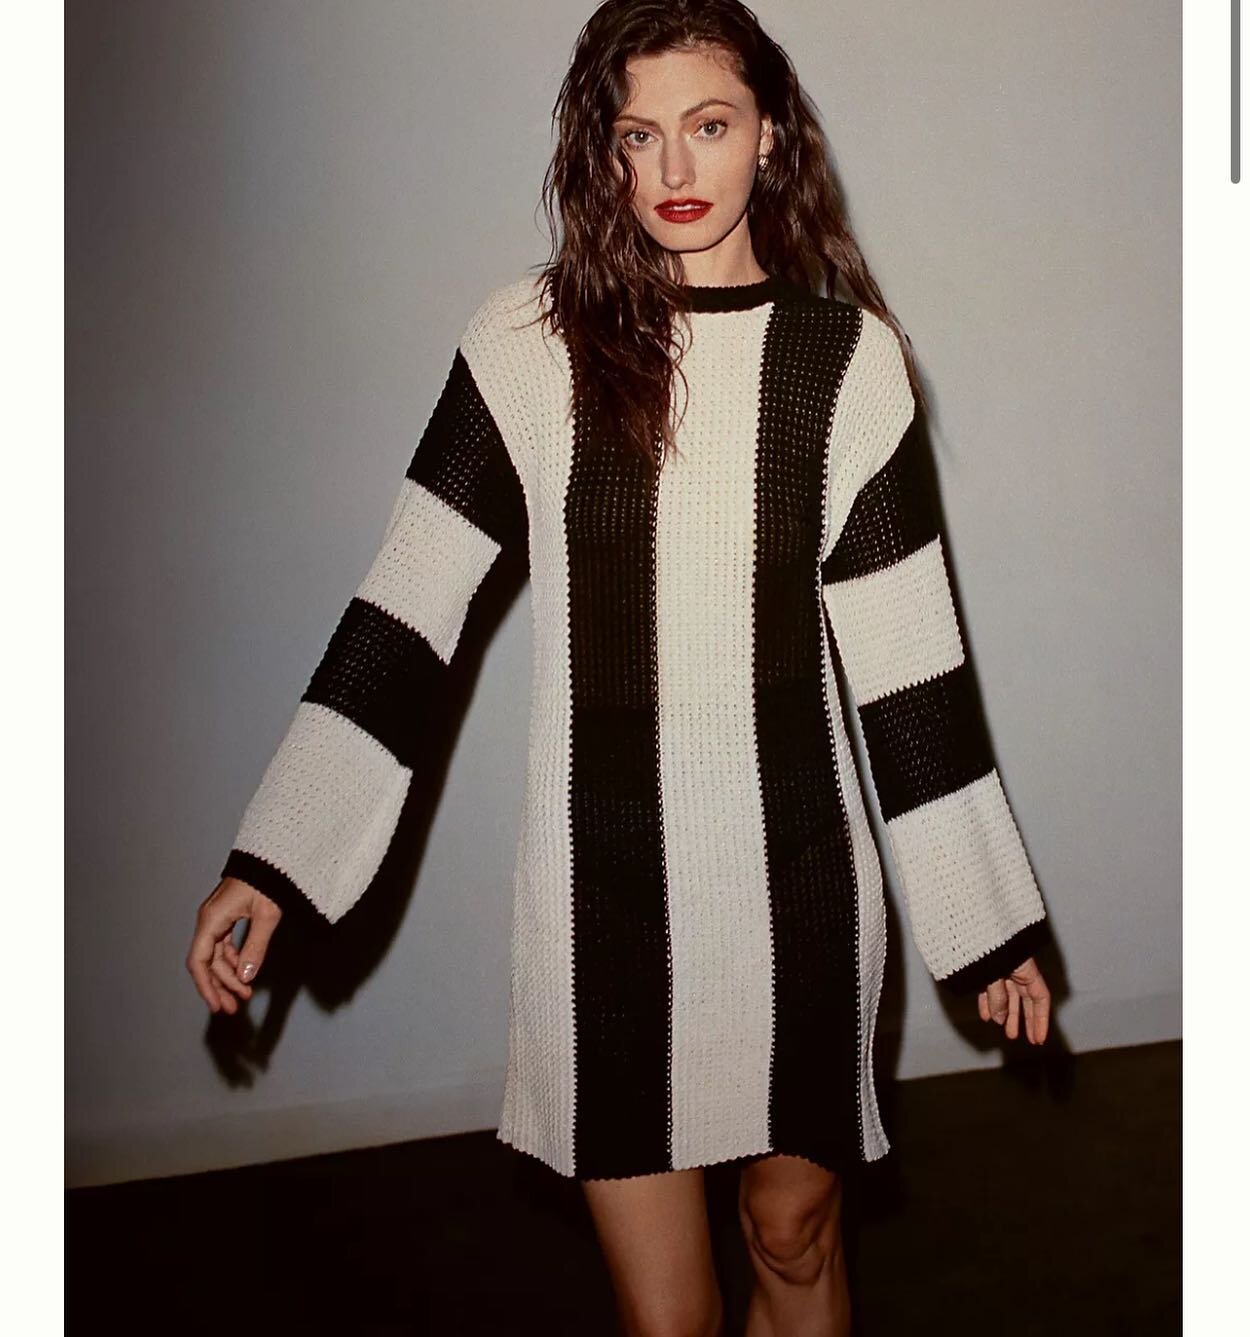 4SI3NNA Ling Sleeve Striped Sweater Mini Dress @anthropologie #boldstripes #sweaterdress #Fall #cozy #blackandwhite